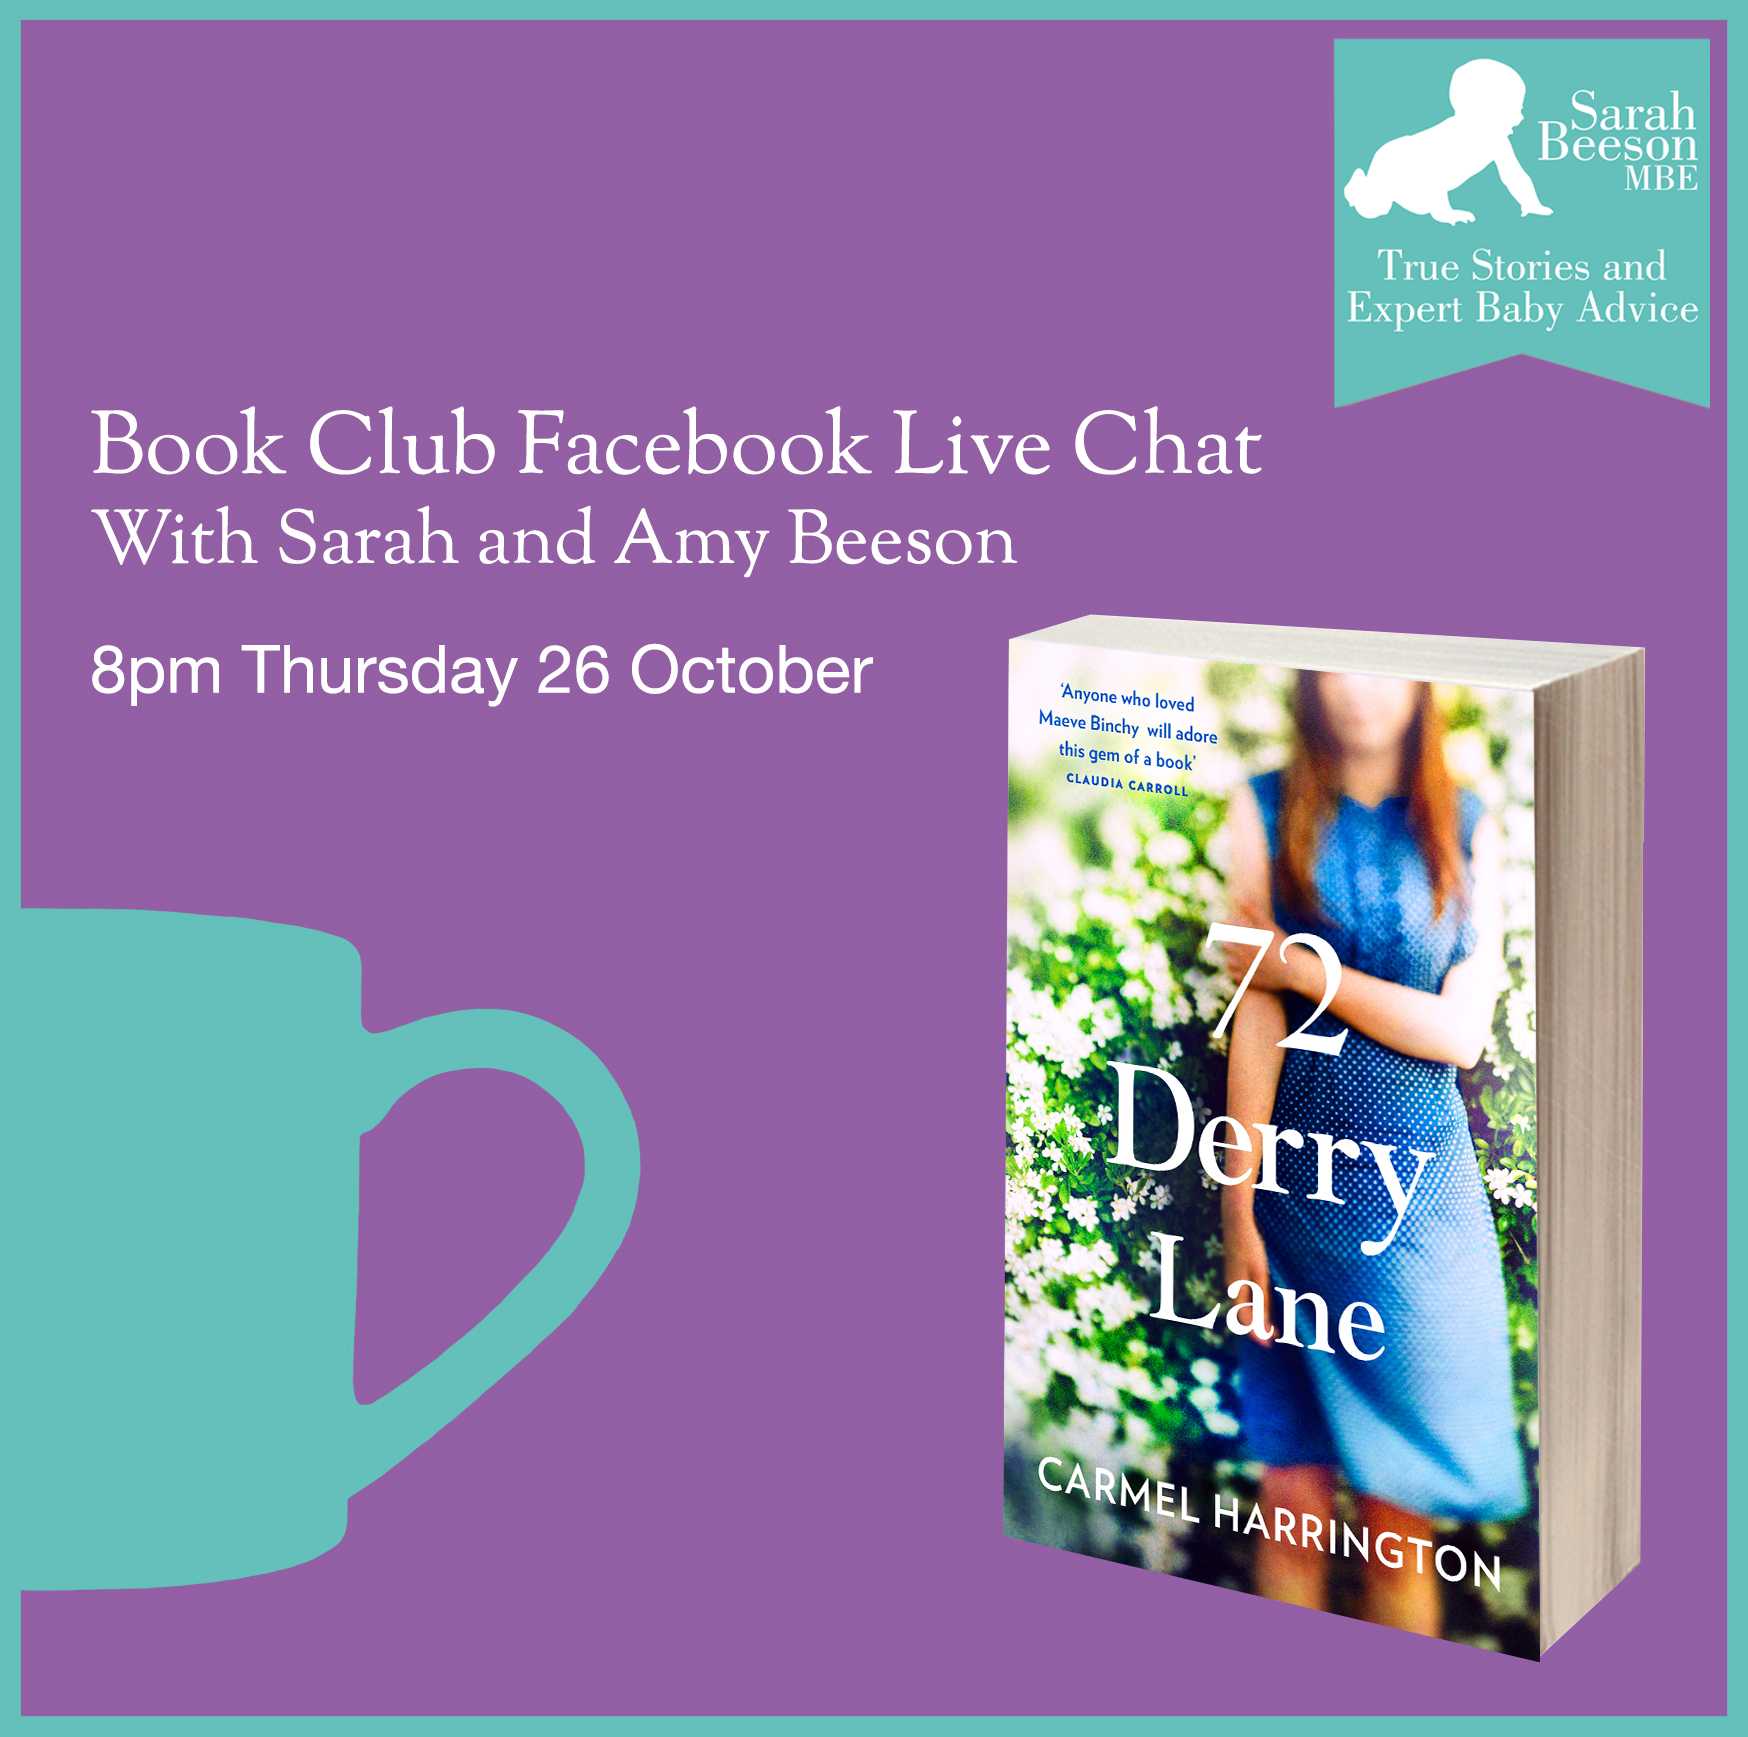 #BookReview ‘The Woman at 72 Derry Lane’ by Carmel Harrington @HappyMrsH @W6BookCafe @Fictionpubteam @HarperCollinsUK #BookBloggers